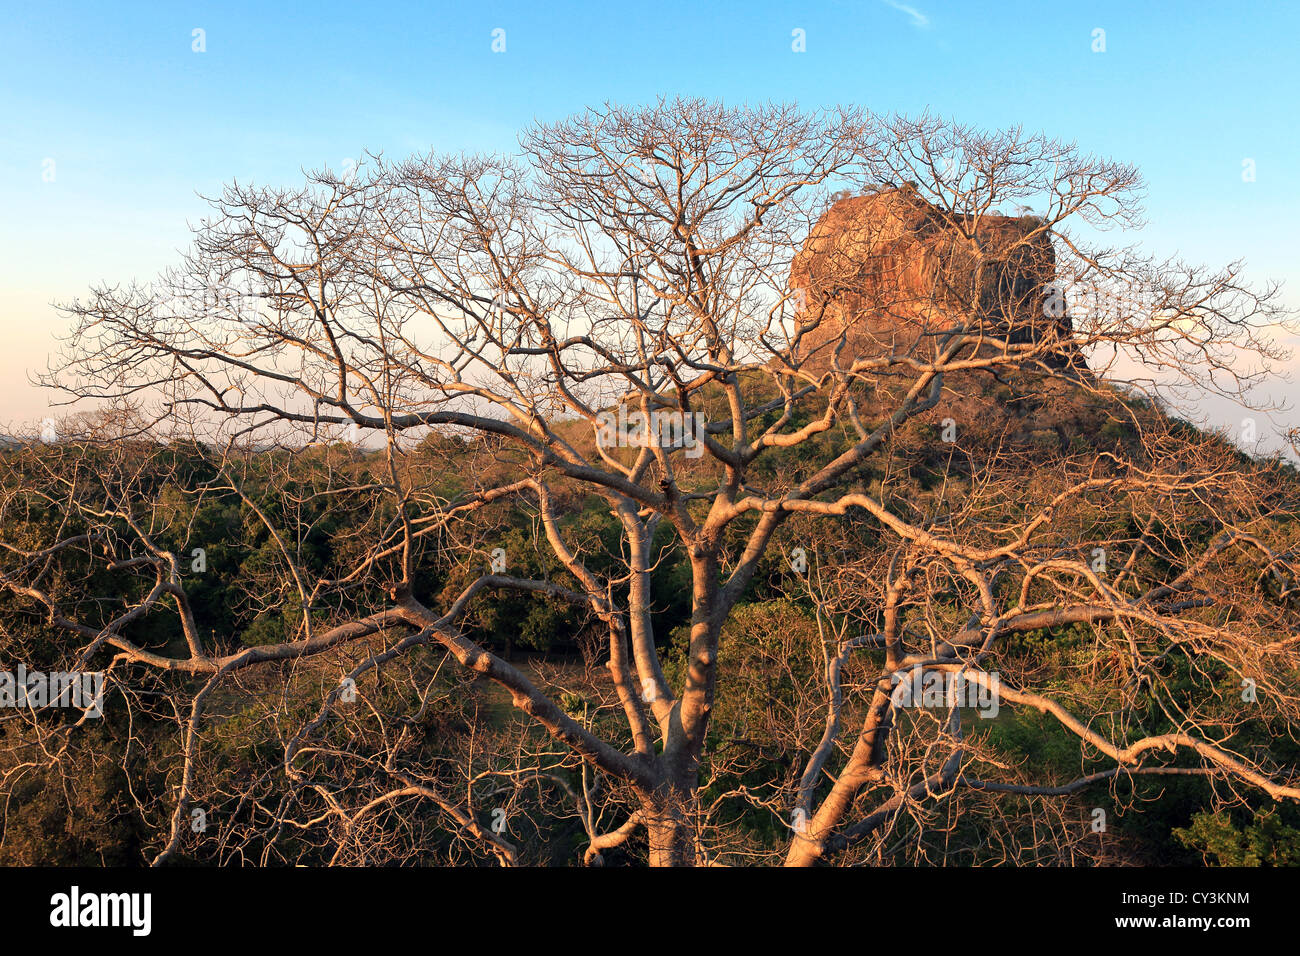 Sigiriya Lion's rock ancient fortress and palace ruin in Sigiriya, Sri Lanka Stock Photo